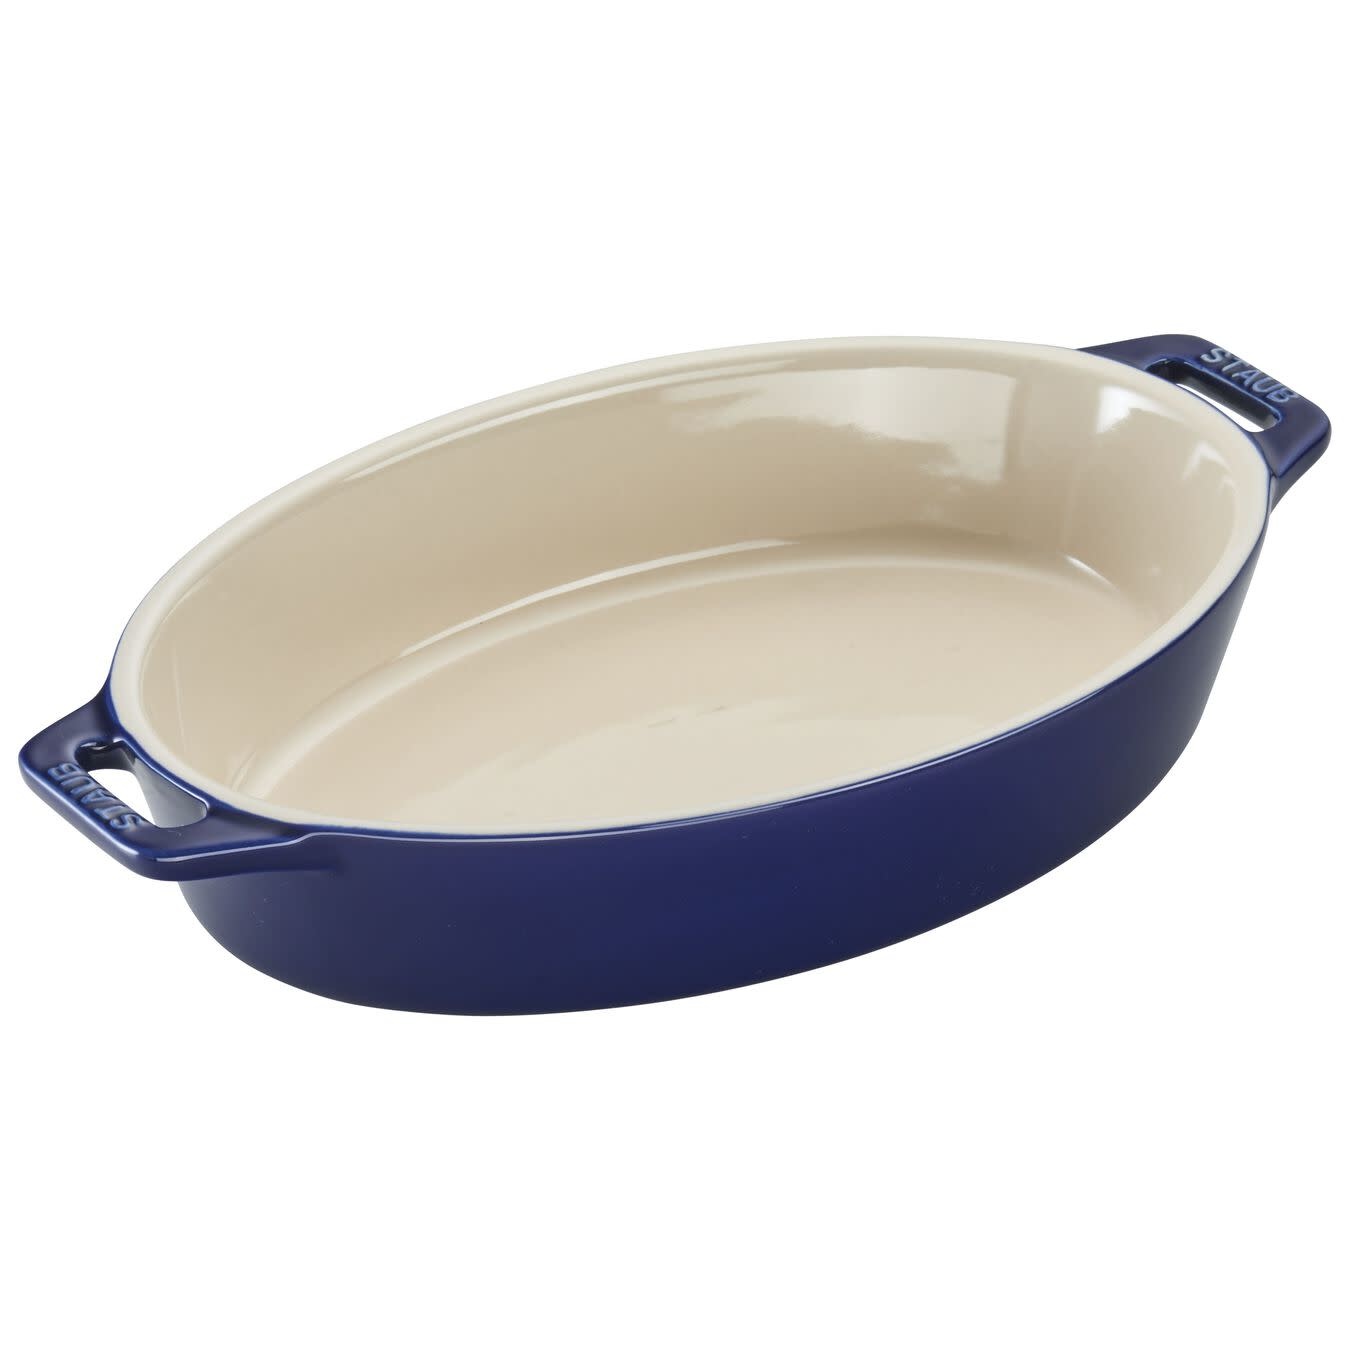 https://cdn.shoplightspeed.com/shops/607171/files/24517670/staub-staub-ceramic-oval-baking-dish-9-inch-dark-b.jpg